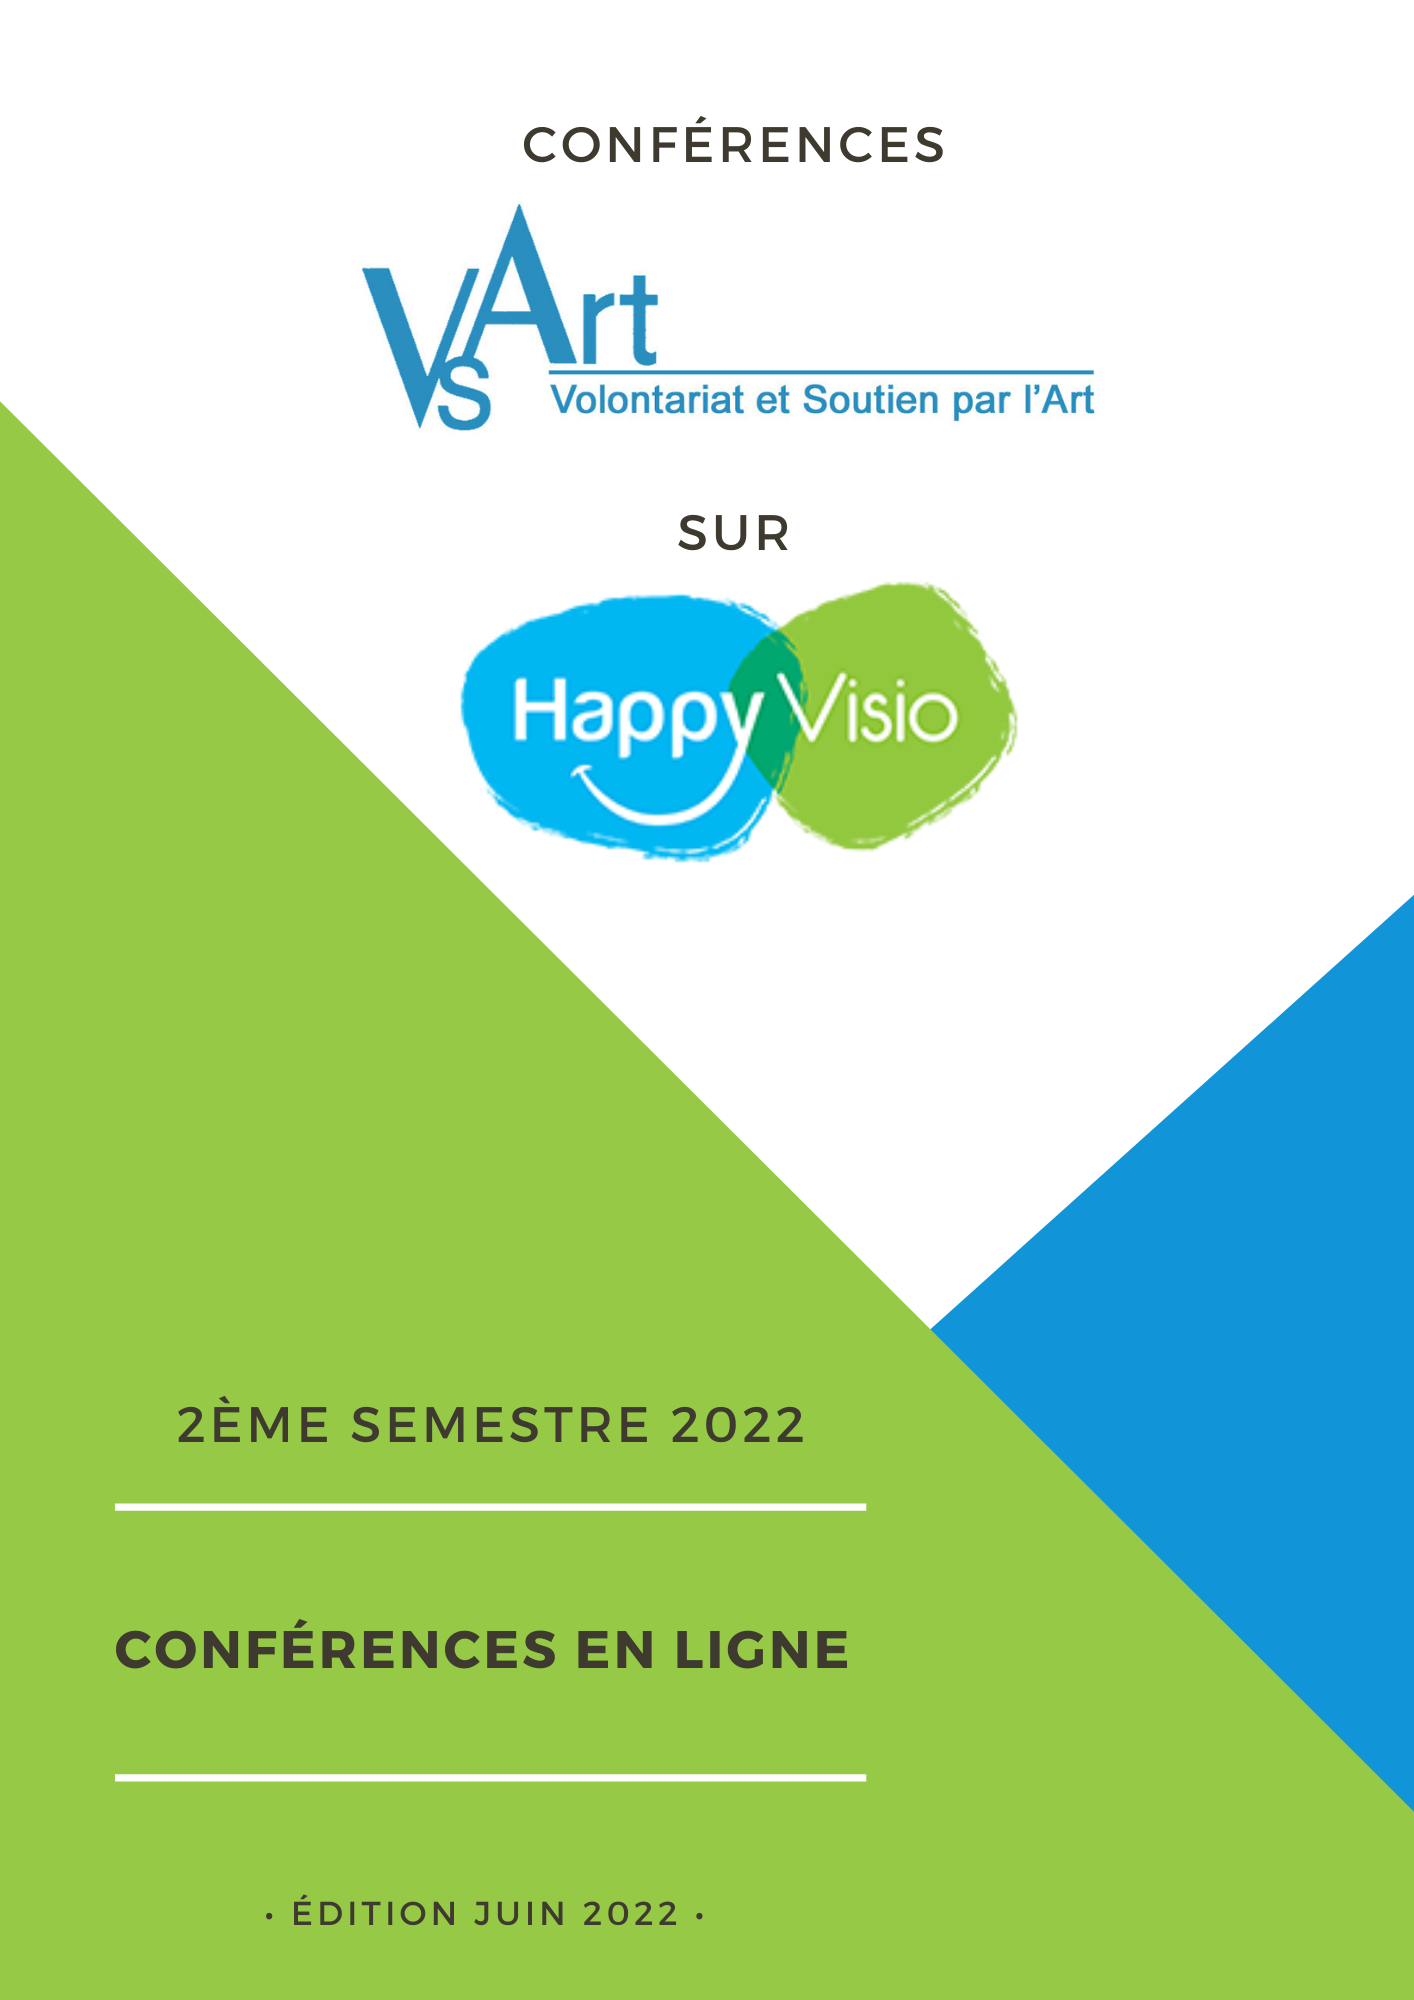 Diffusion conférences VSArt sur plateforme HappyVisio second semestre 2022